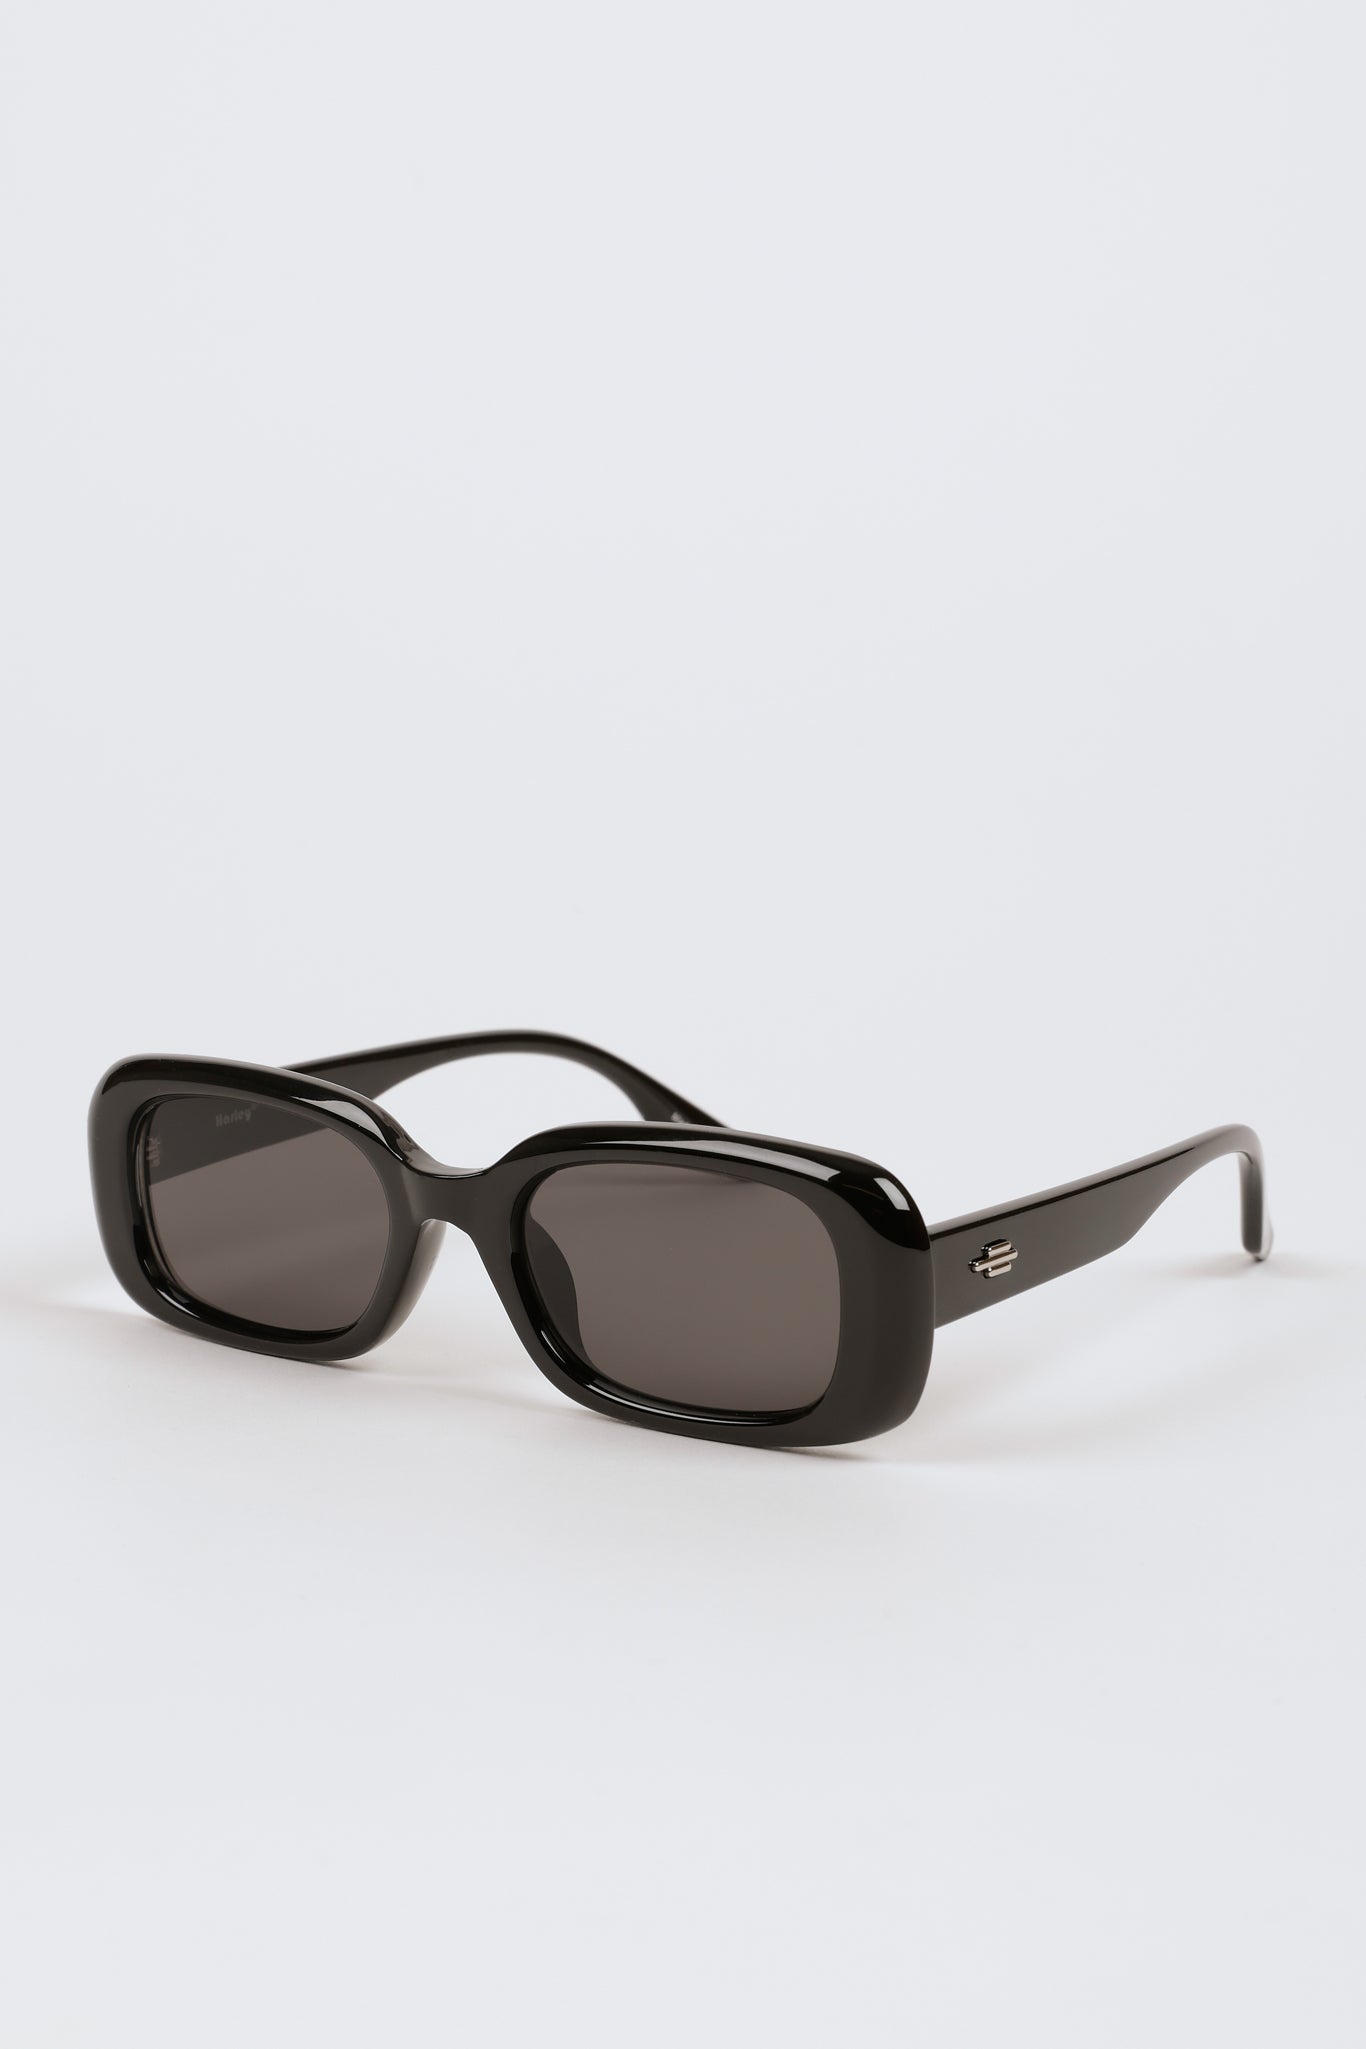 Black thick rectangular sunglasses